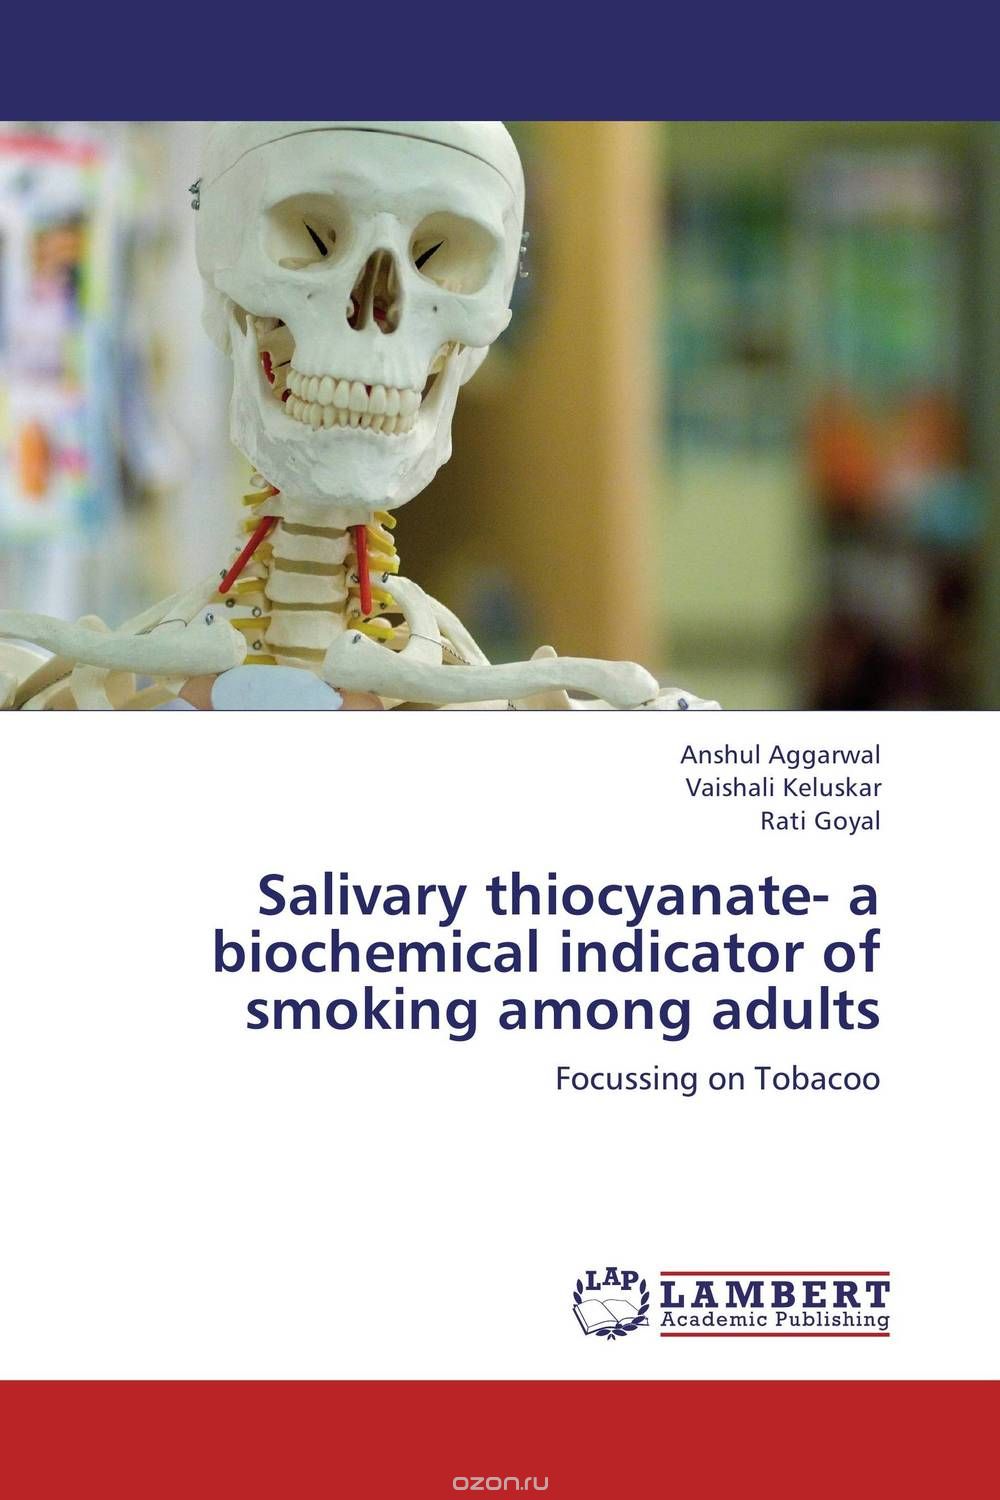 Скачать книгу "Salivary thiocyanate- a biochemical indicator of smoking among adults"